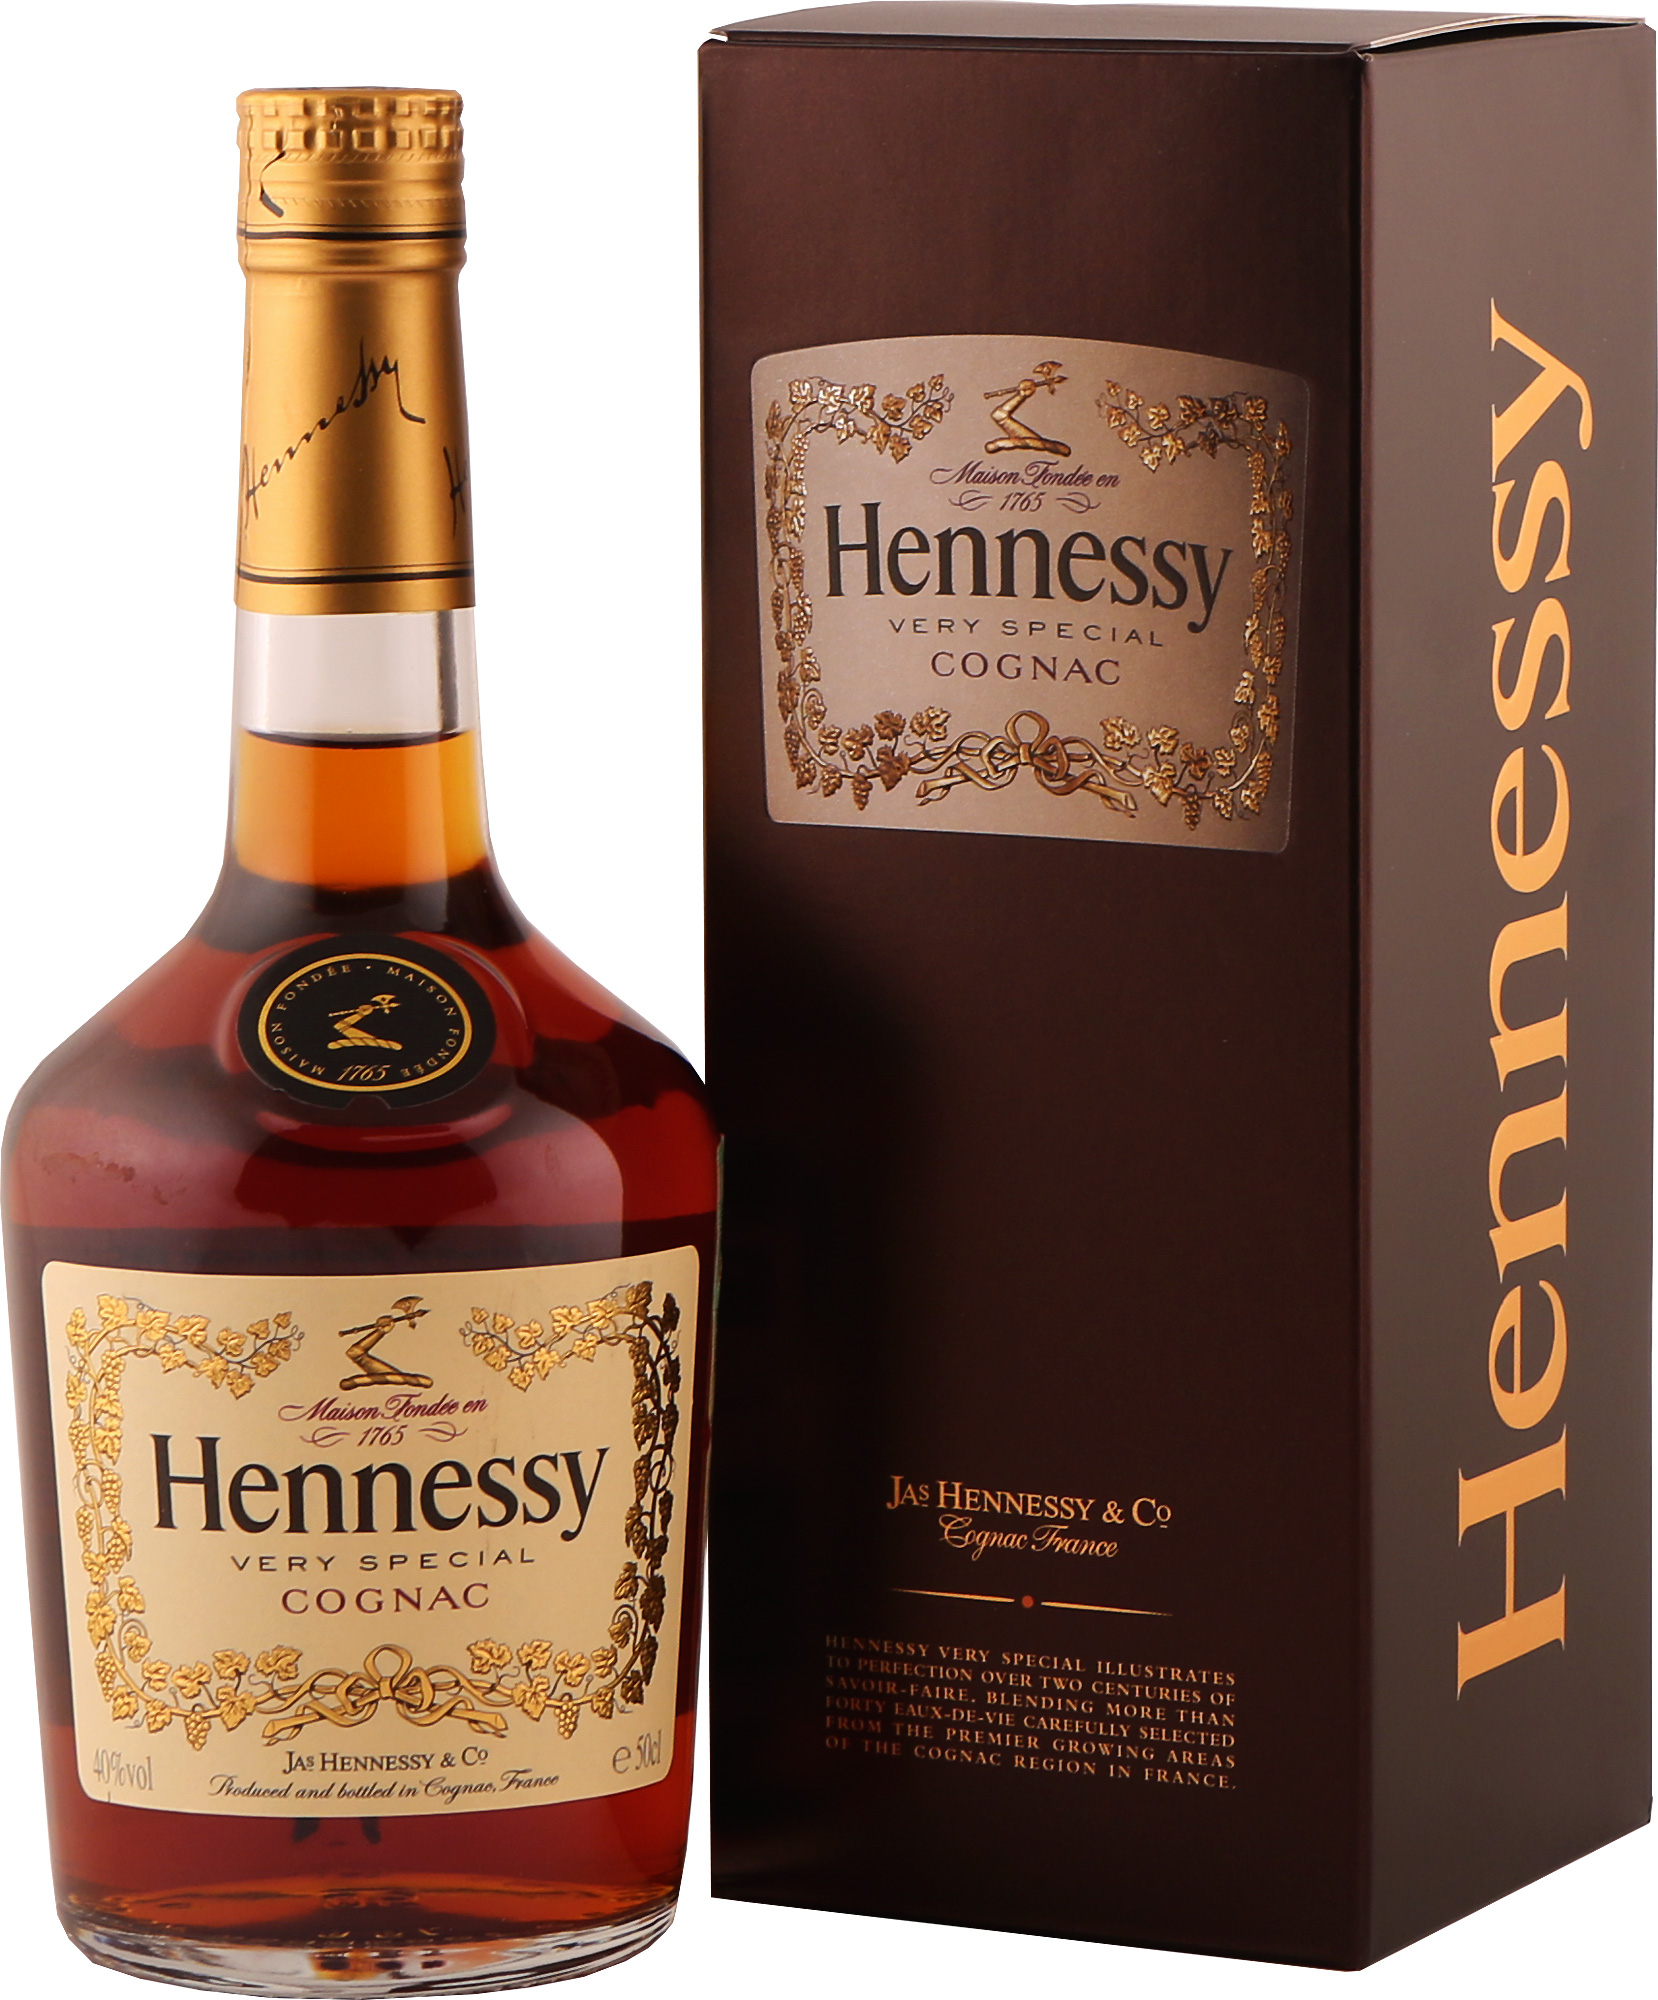 Hennessy cognac цена. Французский коньяк Хеннесси. Коньяк французский Hennessy vs. Французские коньяки Хеннесси Хо. Коньяк Hennessy Cognac.